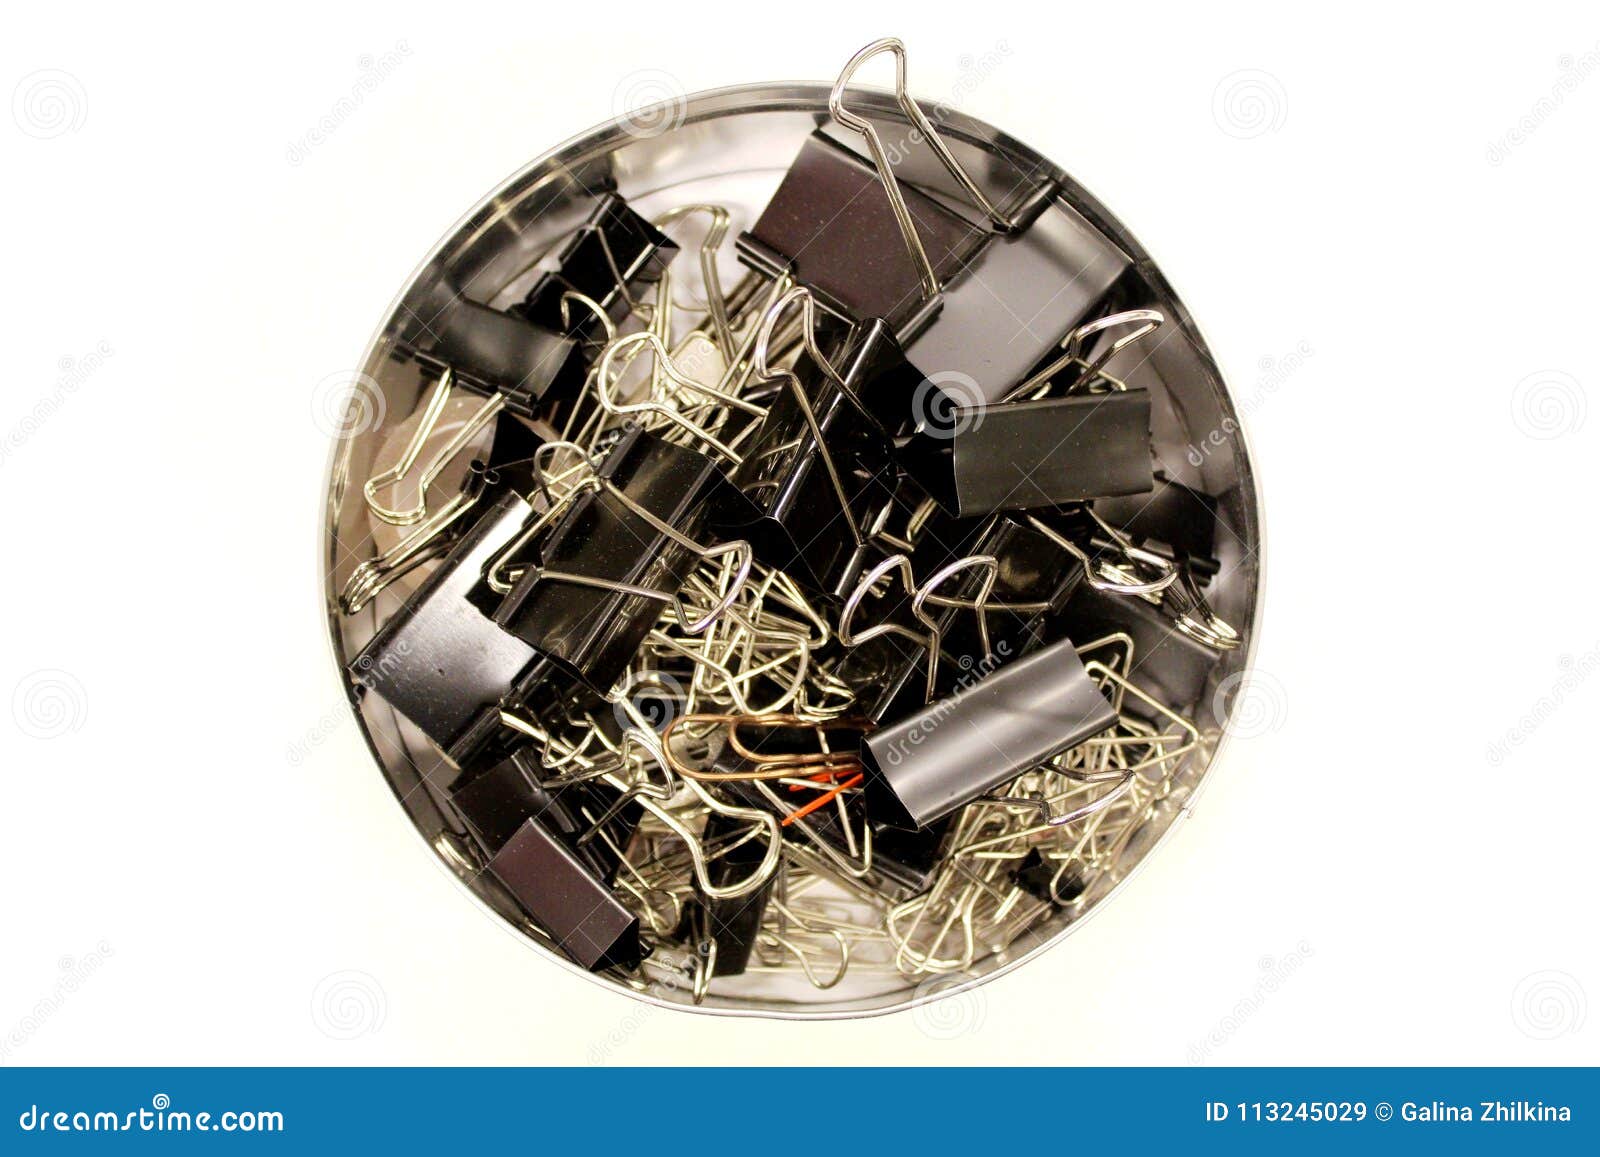 binder clips in a round box